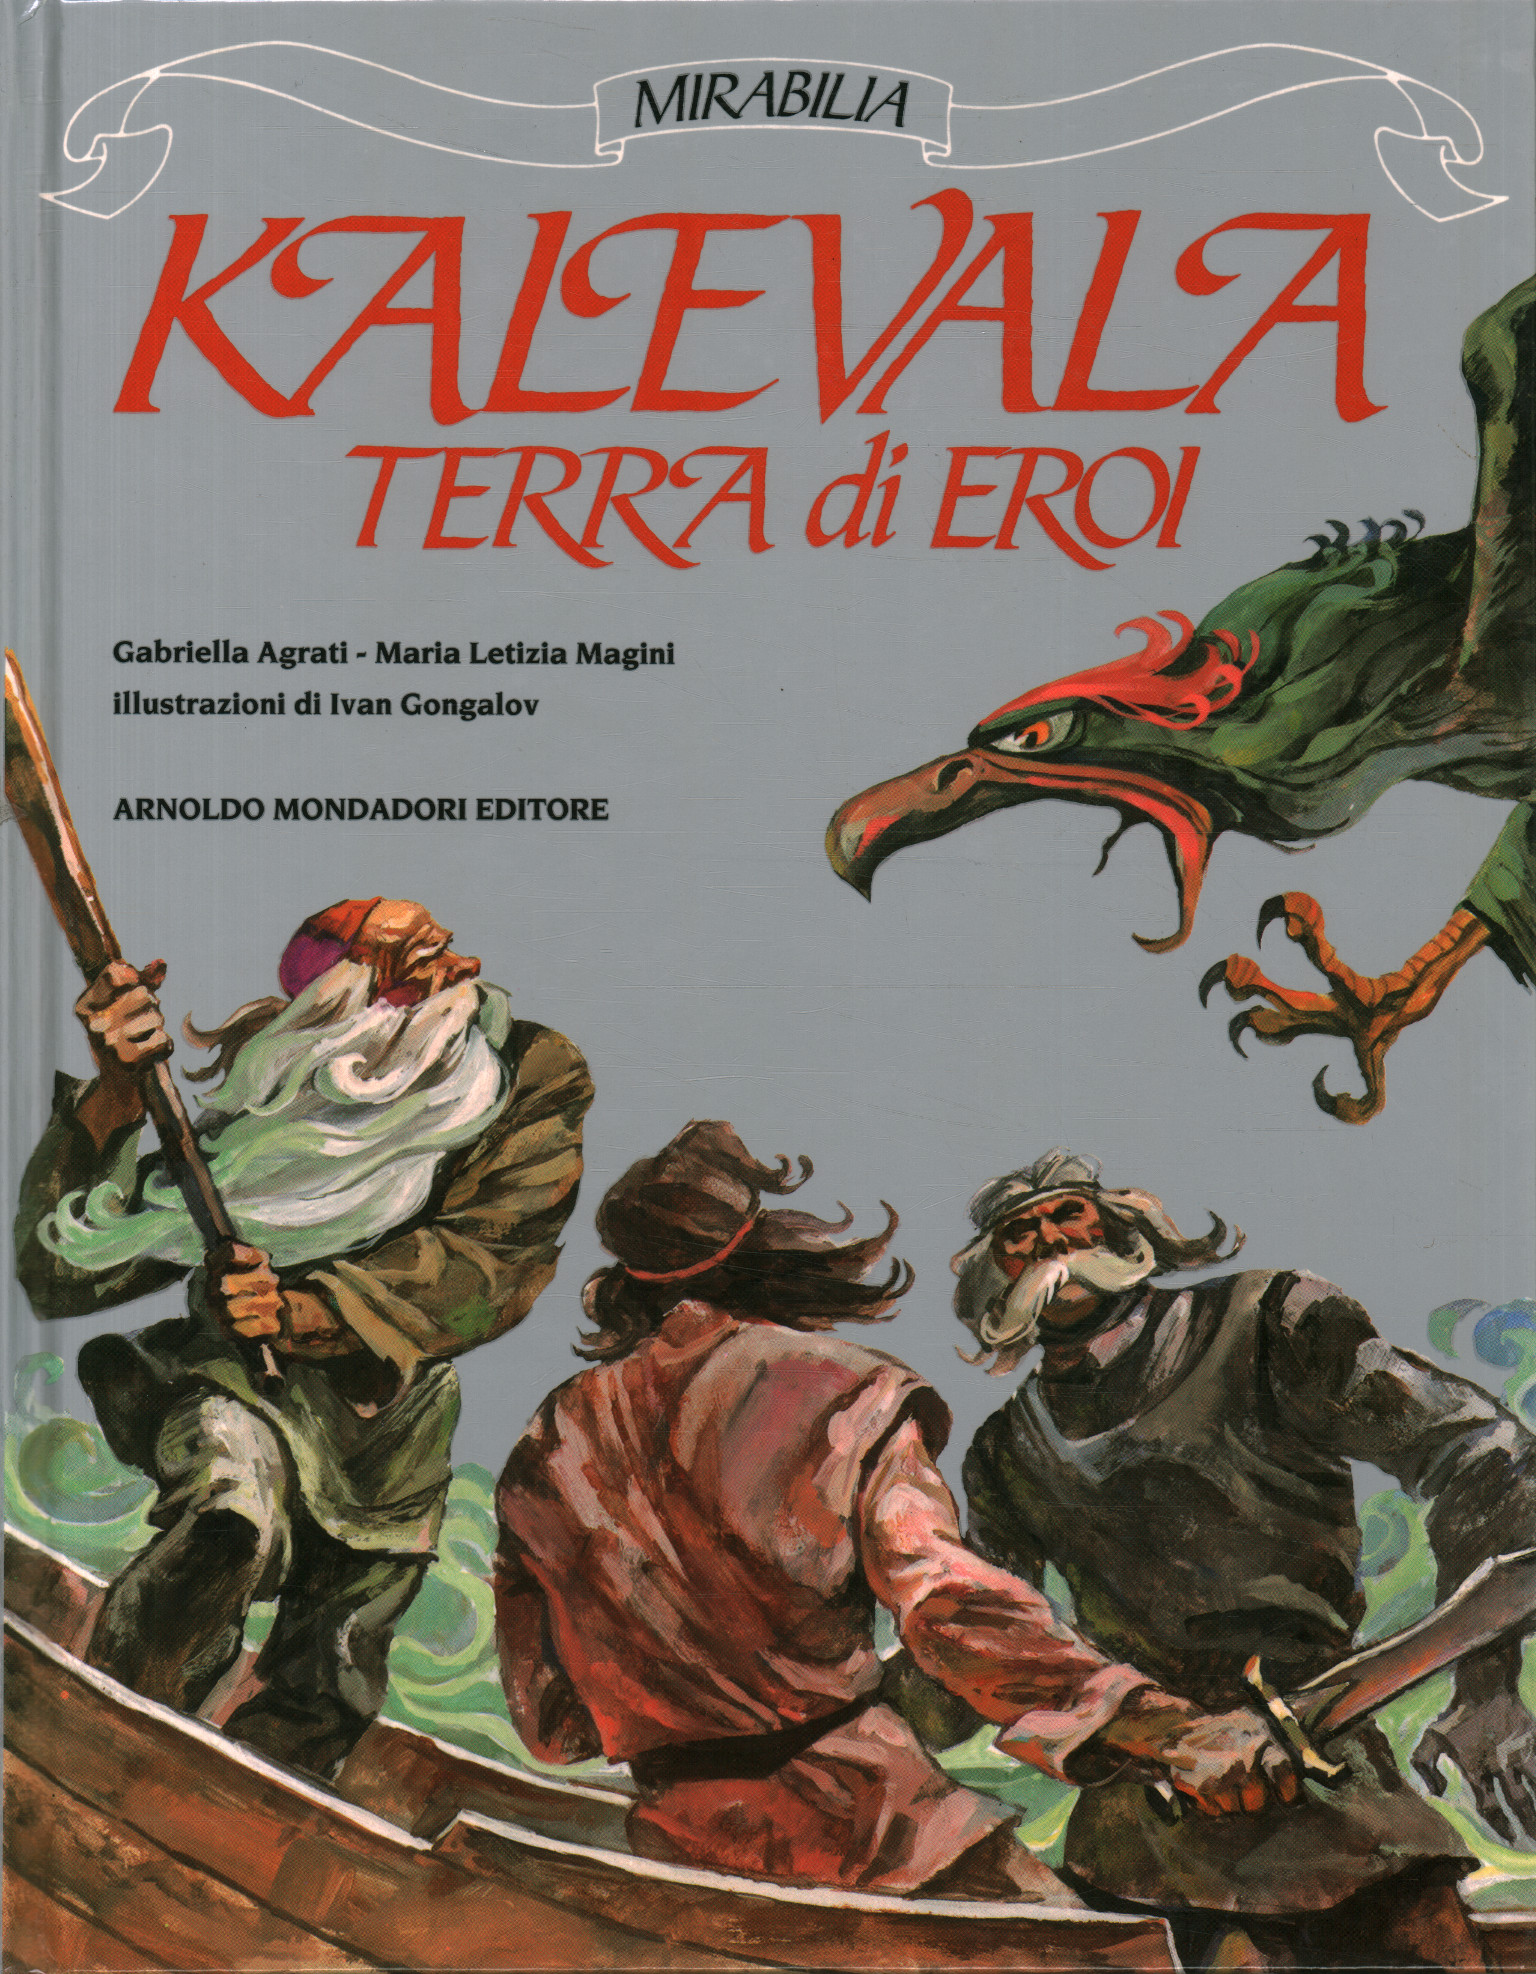 Kalevala land of heroes